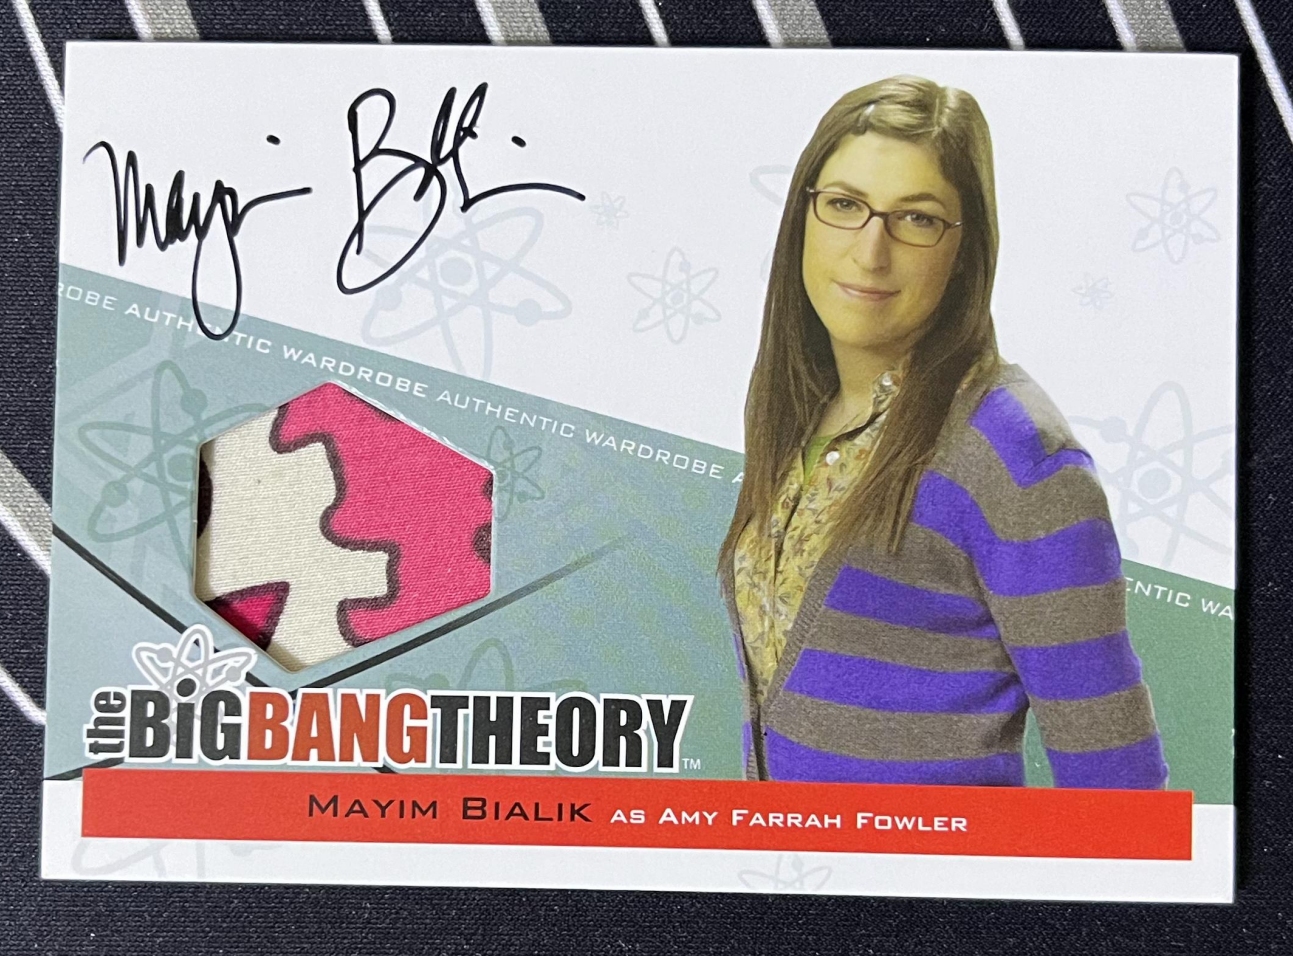 2012 Cryptozoic The Big Bang Theory Mayim Bialik 老米拍卖ES279 生活大爆炸3&4季 马伊姆拜力克 饰演艾米 戏服签字 实物料卡签 卡品如图 小焦